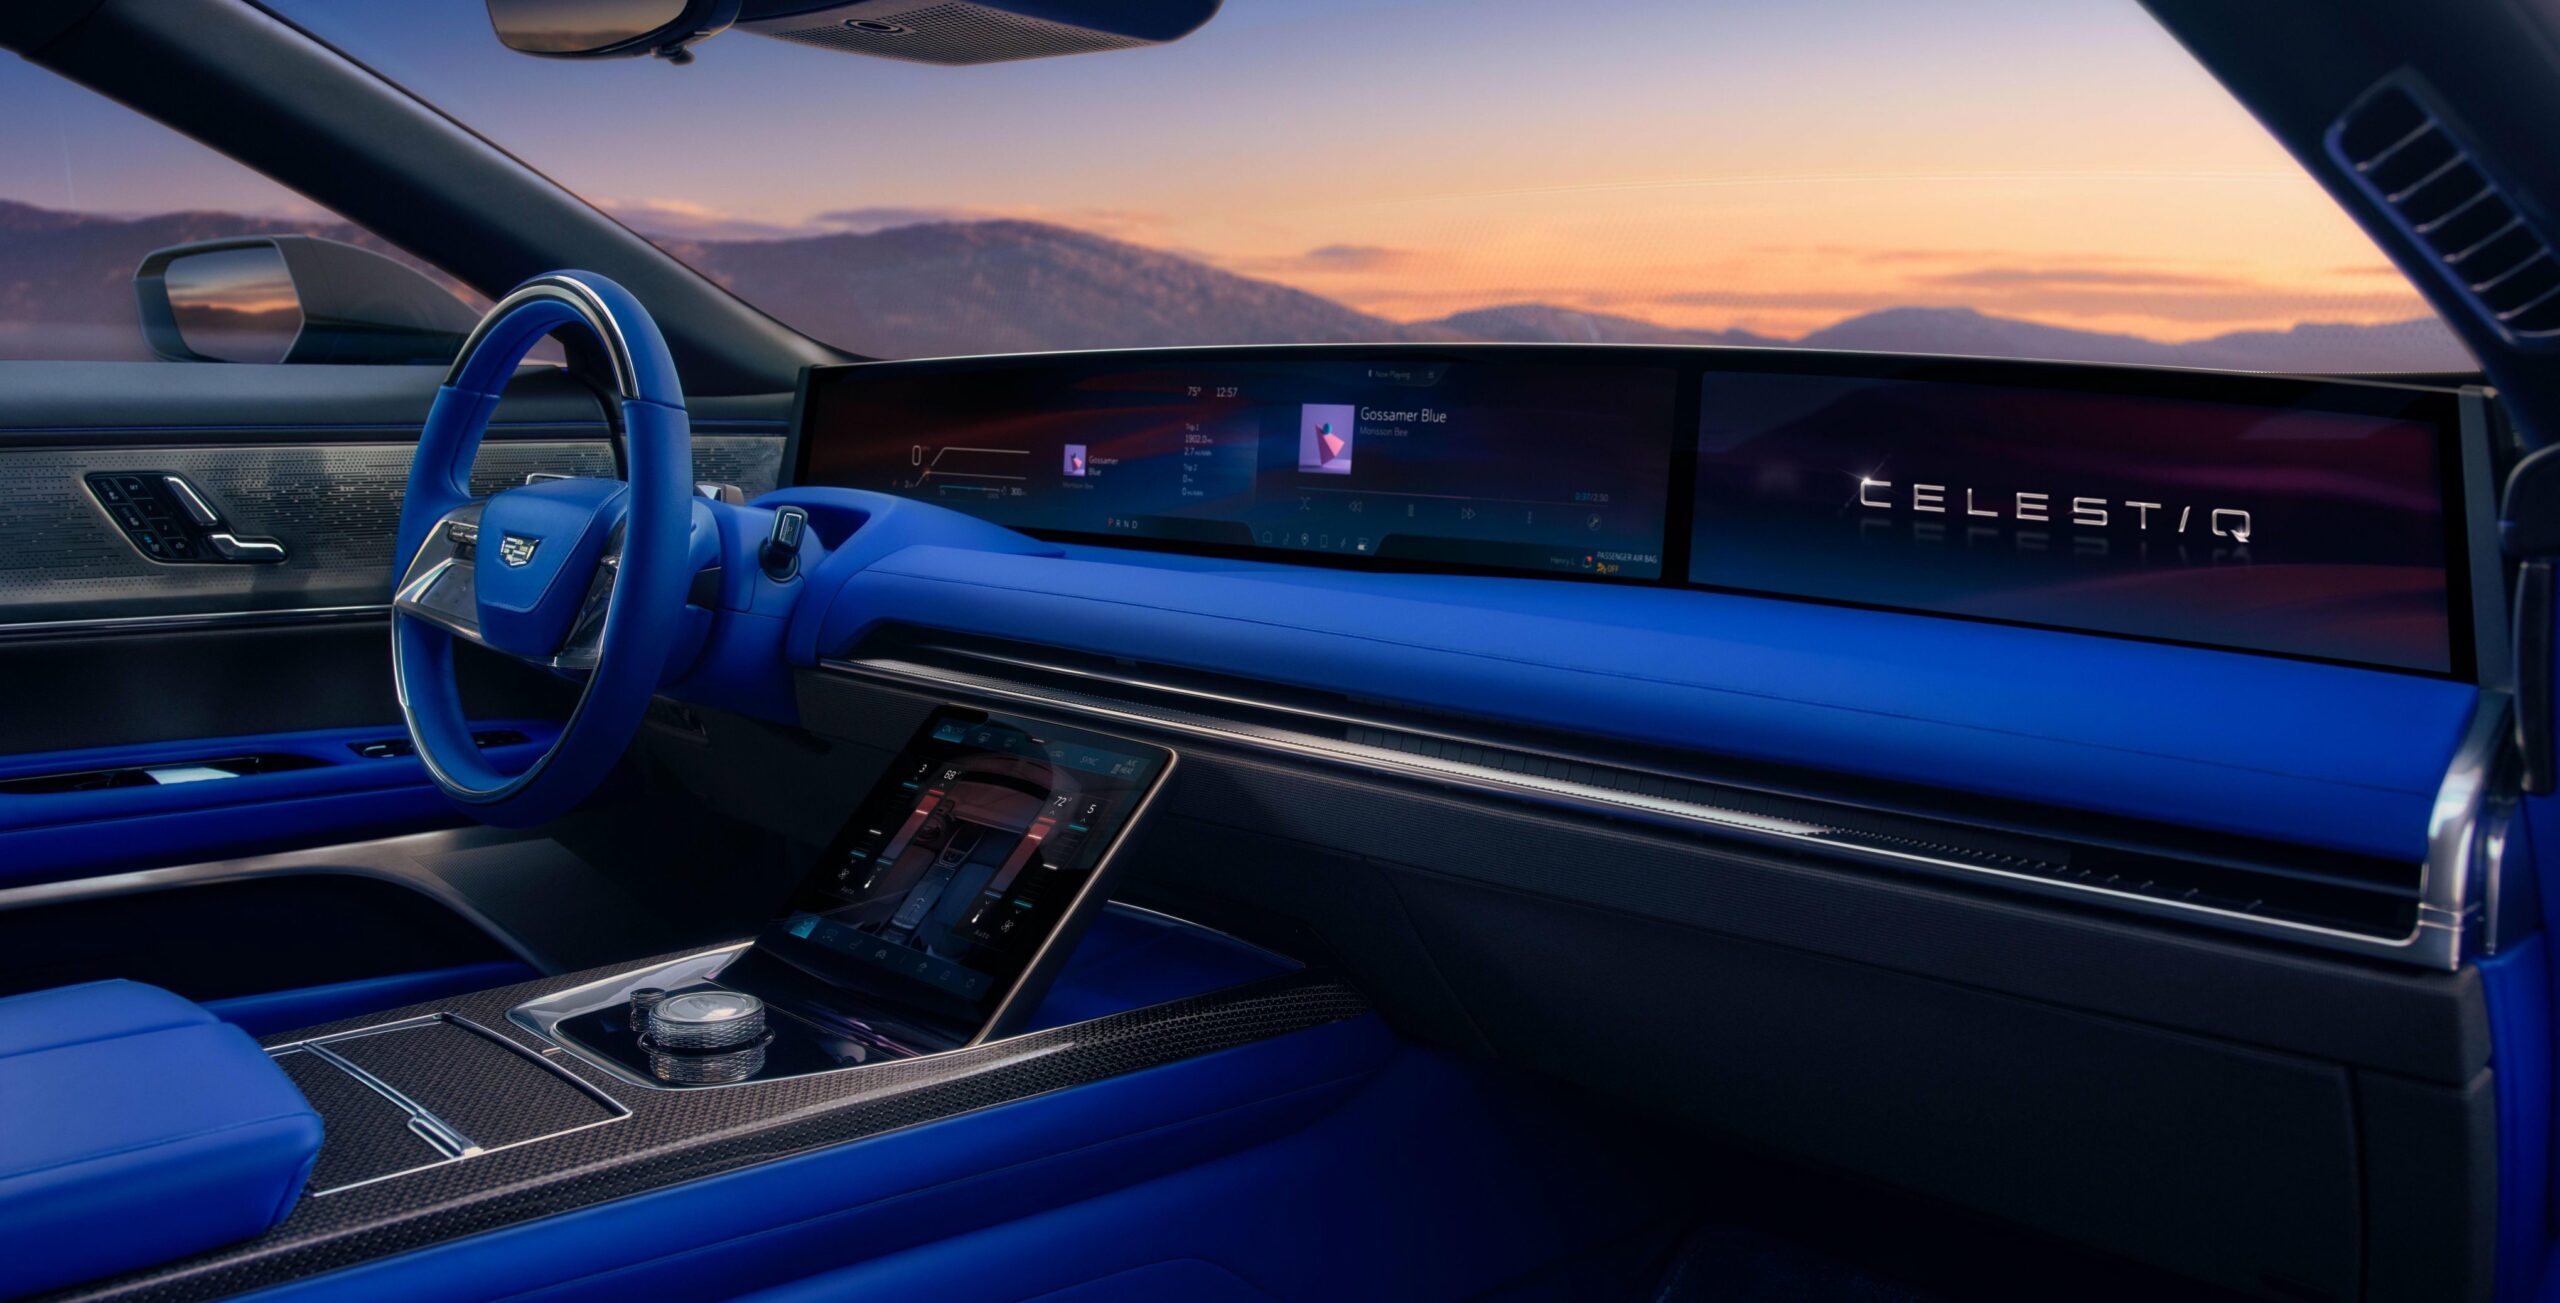 Cadillac unveils the all-new luxurious Celestiq EV